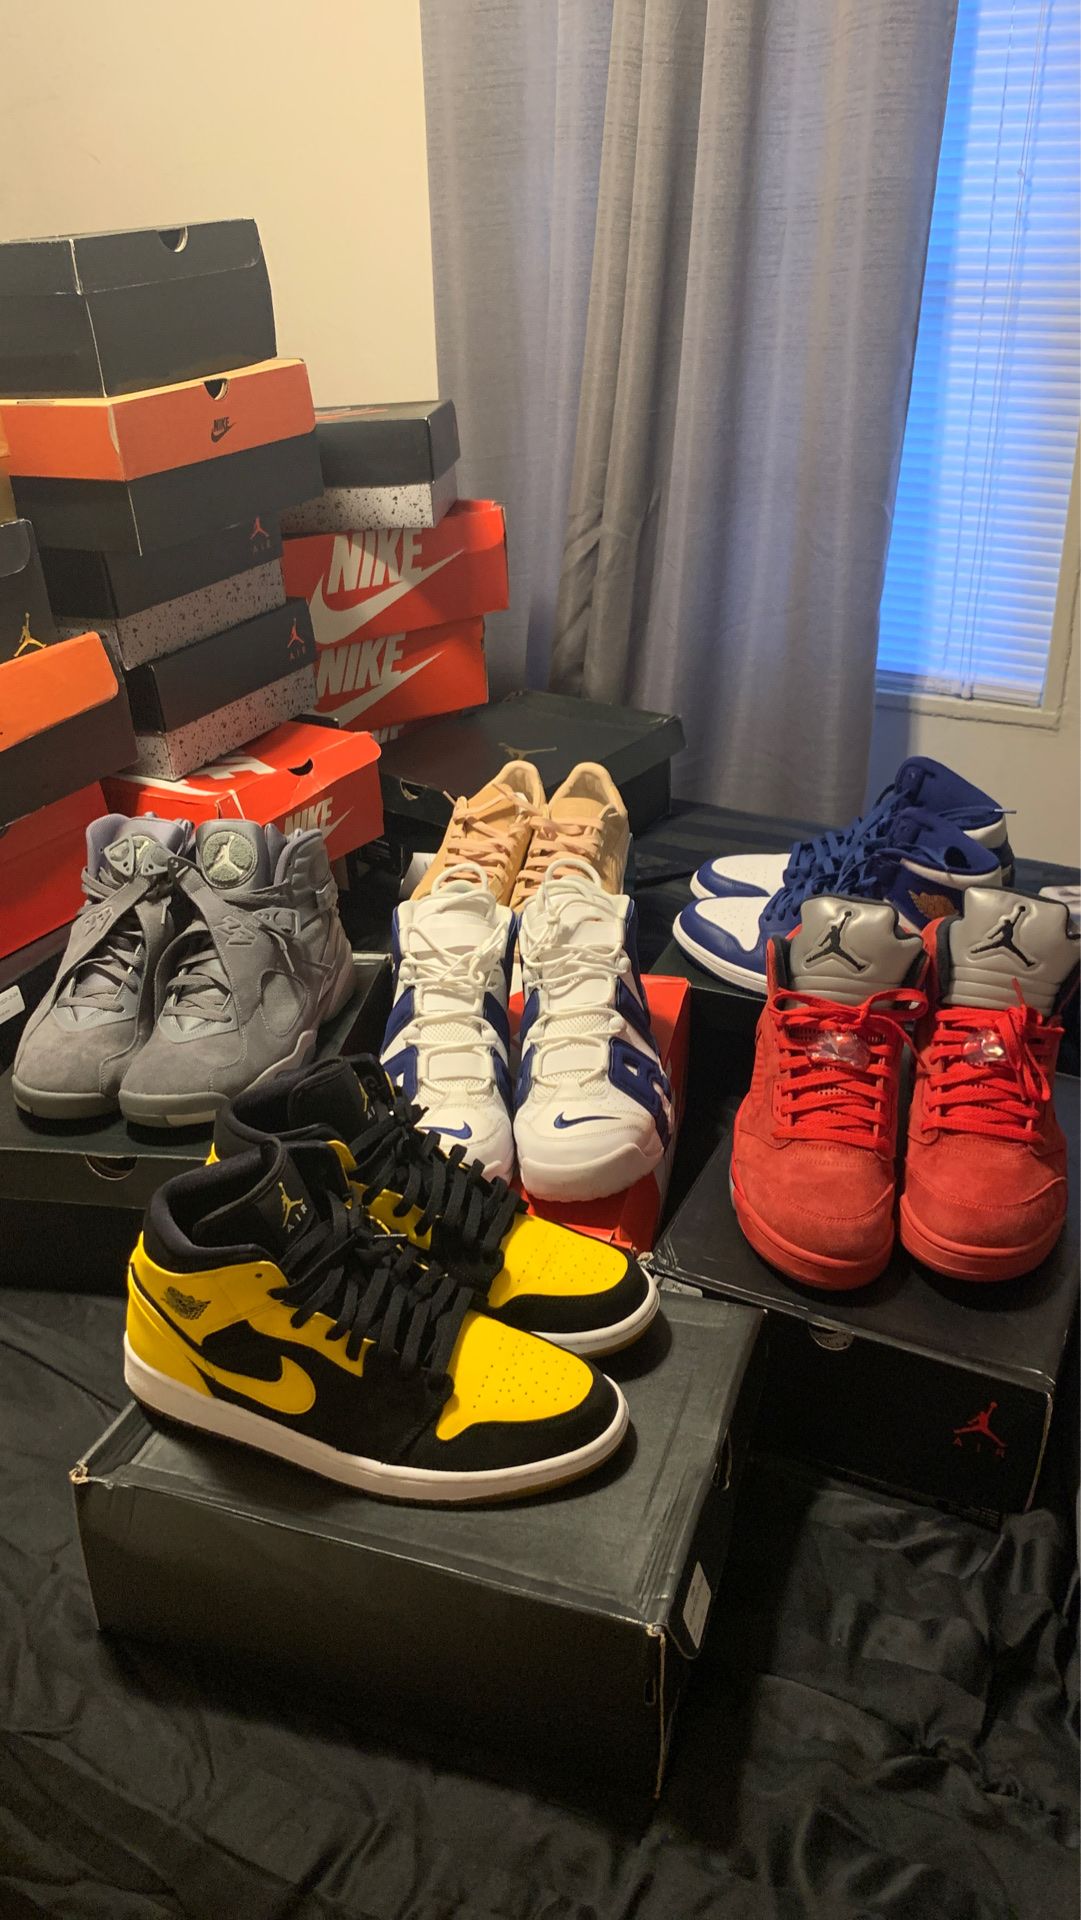 Shoes, Jordan, Nike, and Puma